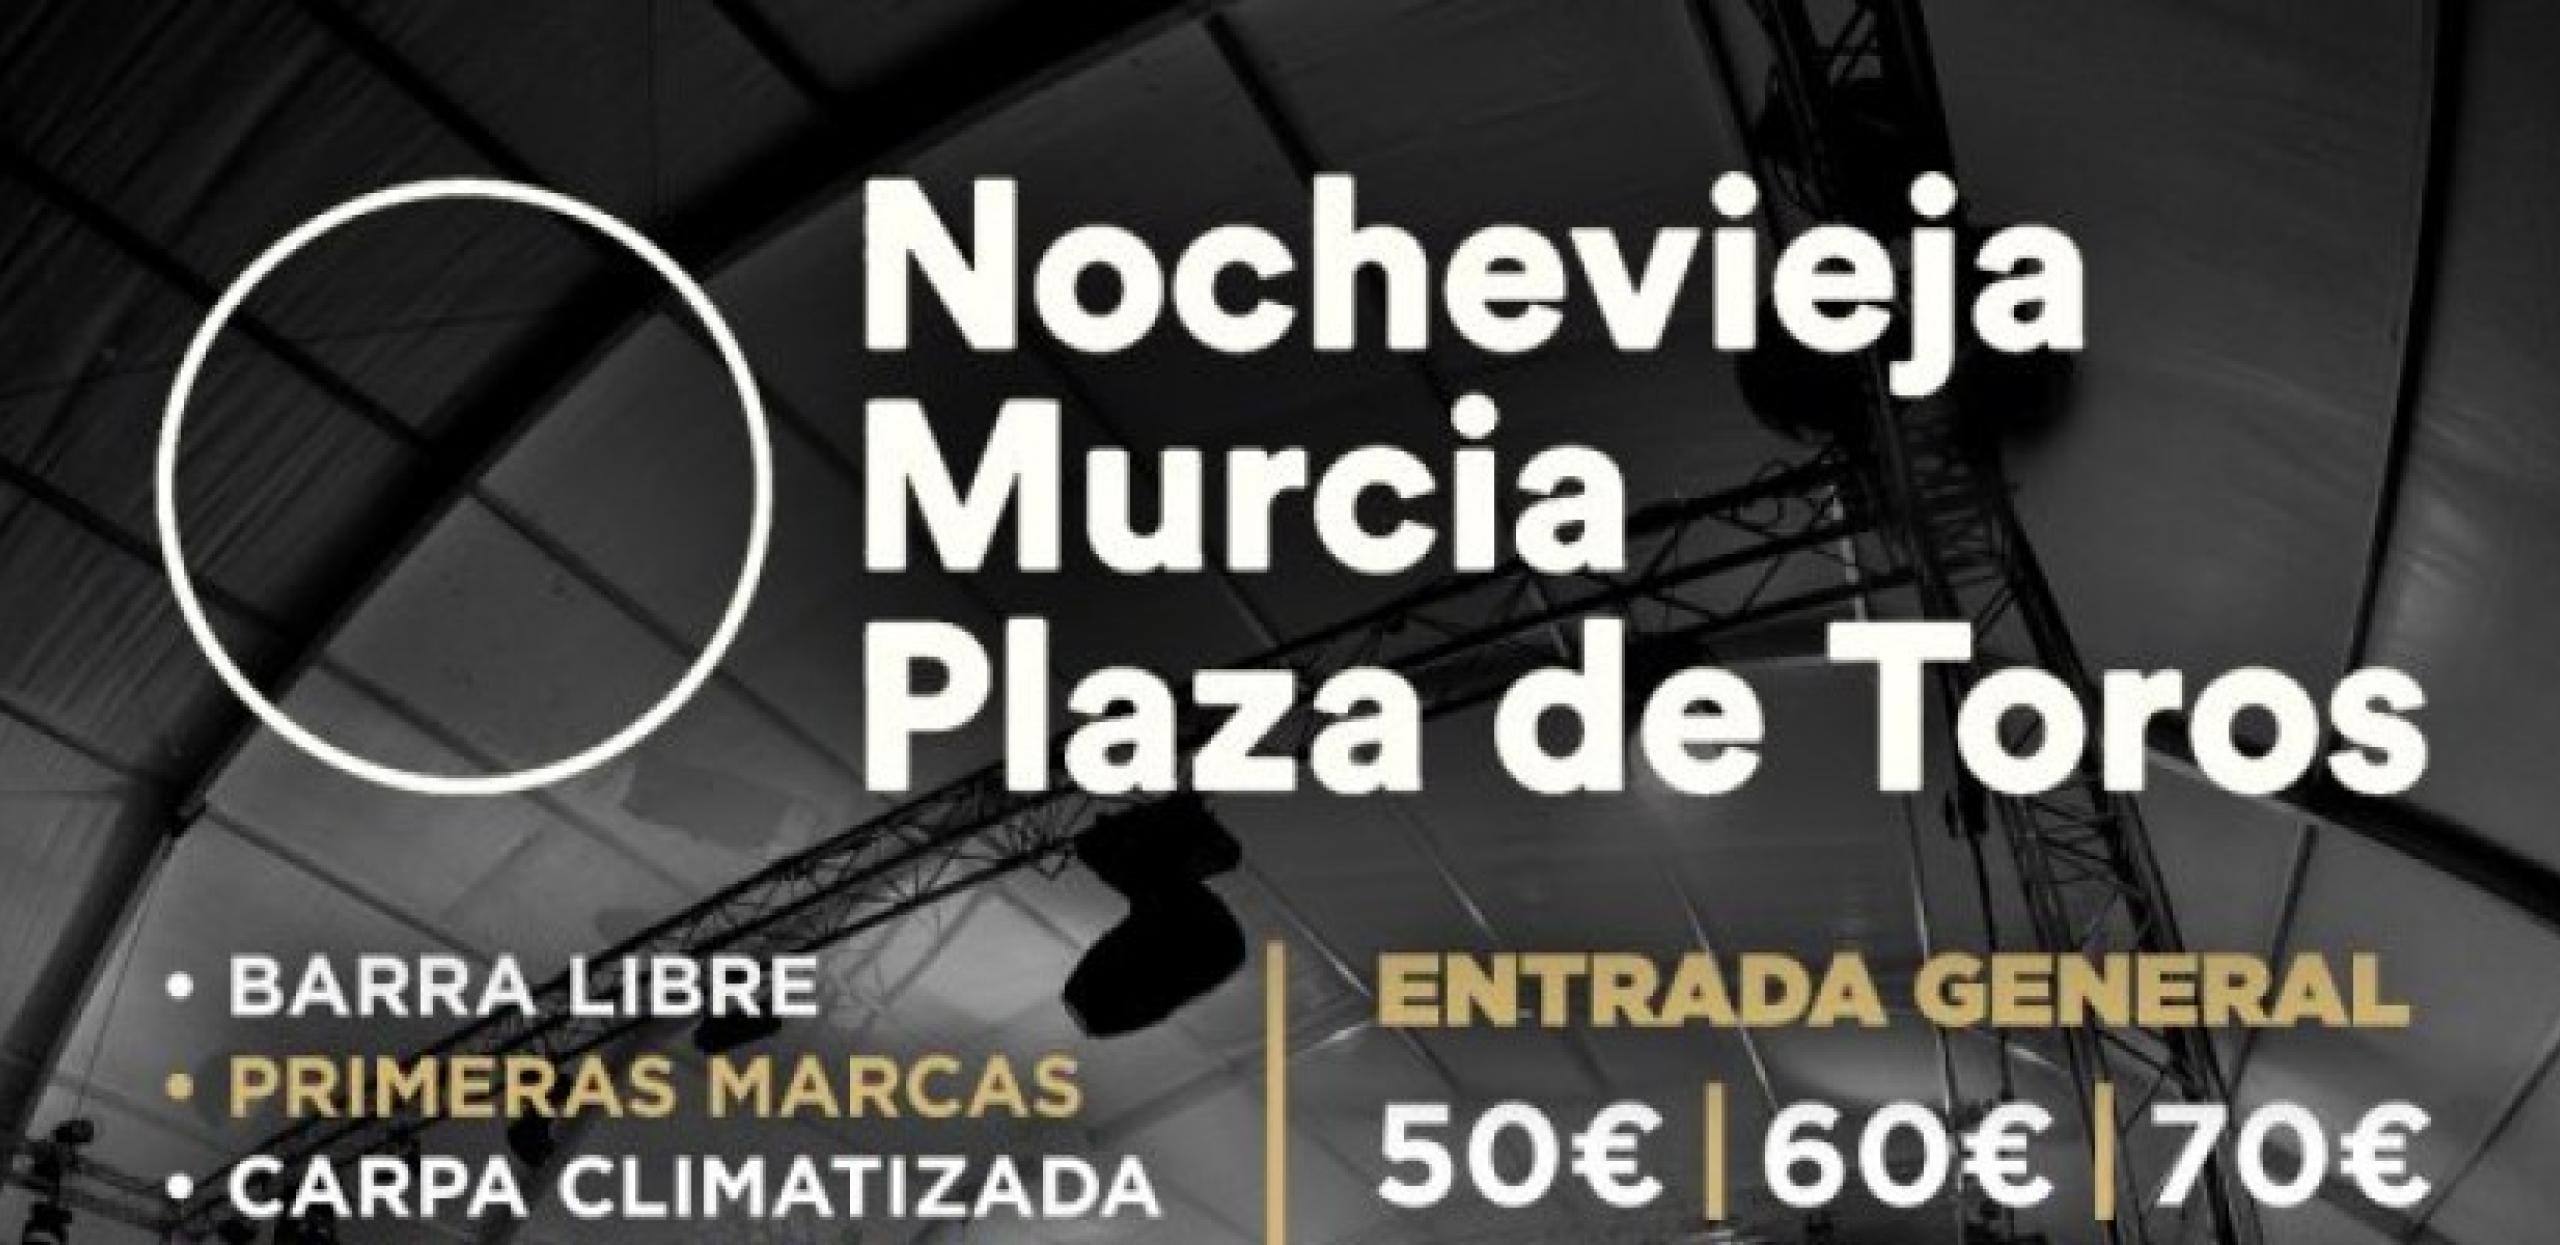 Nochevieja Murcia Plaza de Toros 2021